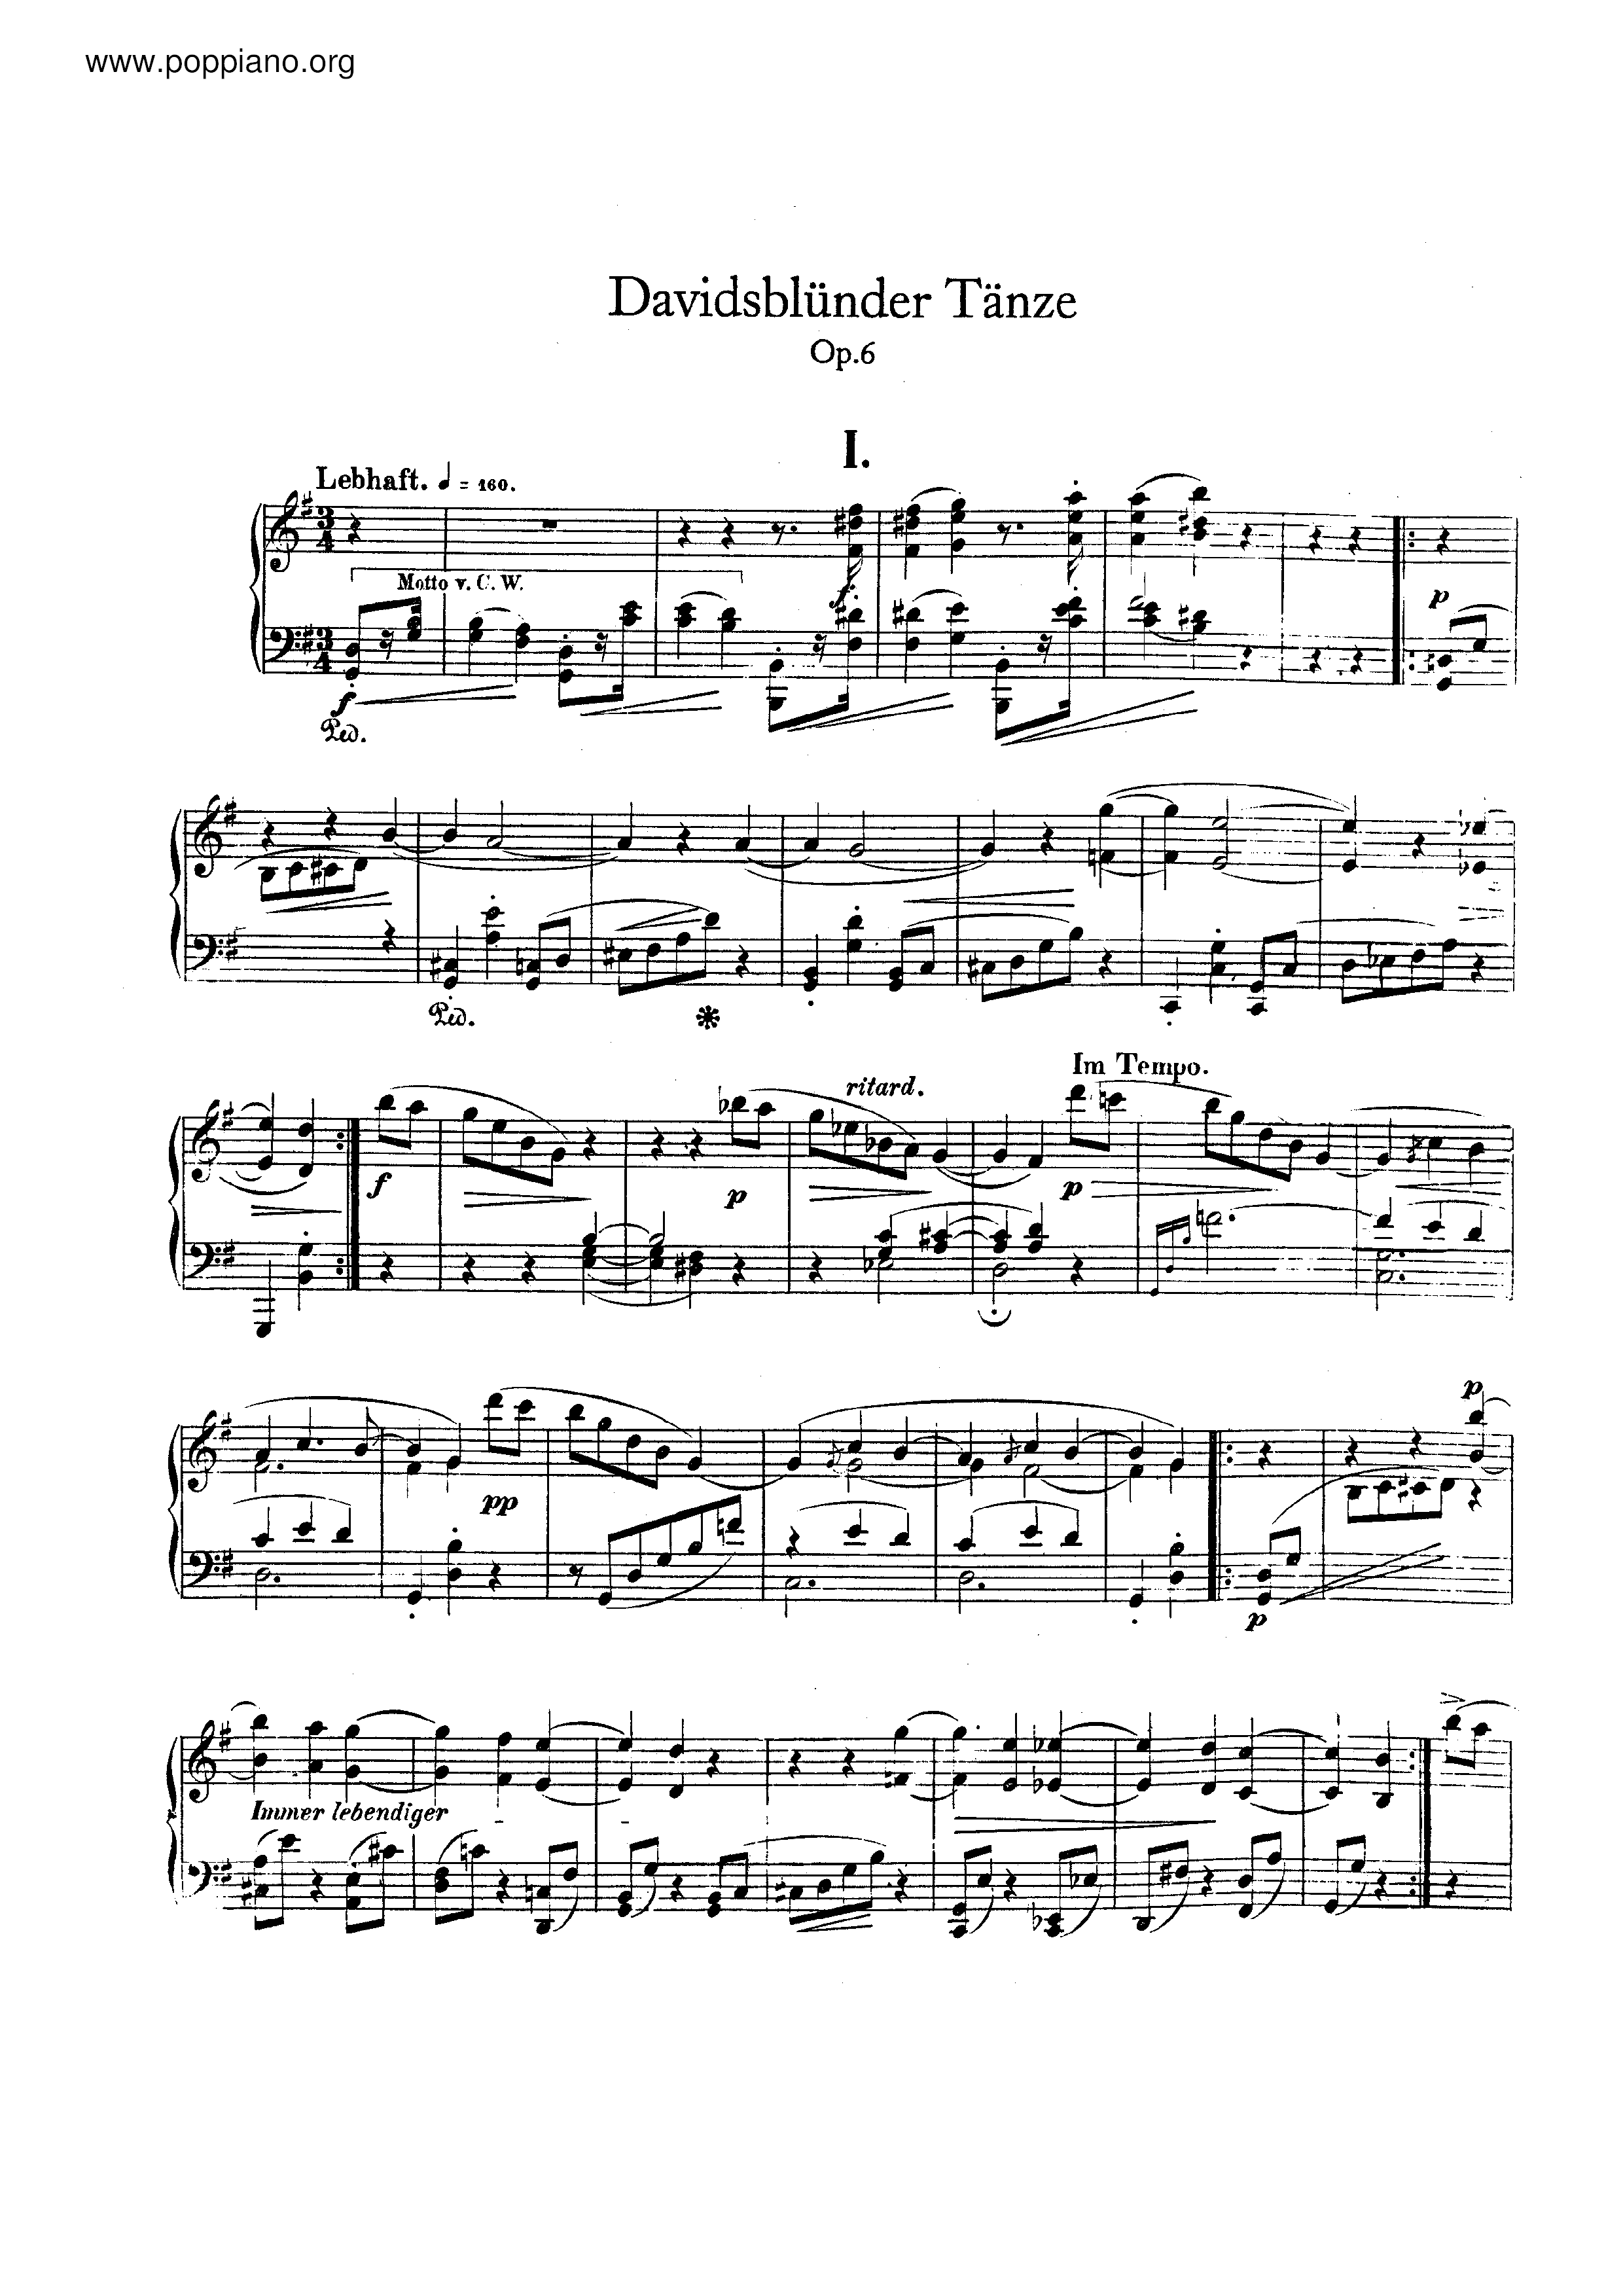 Davidsbundlertanze, Op.6ピアノ譜